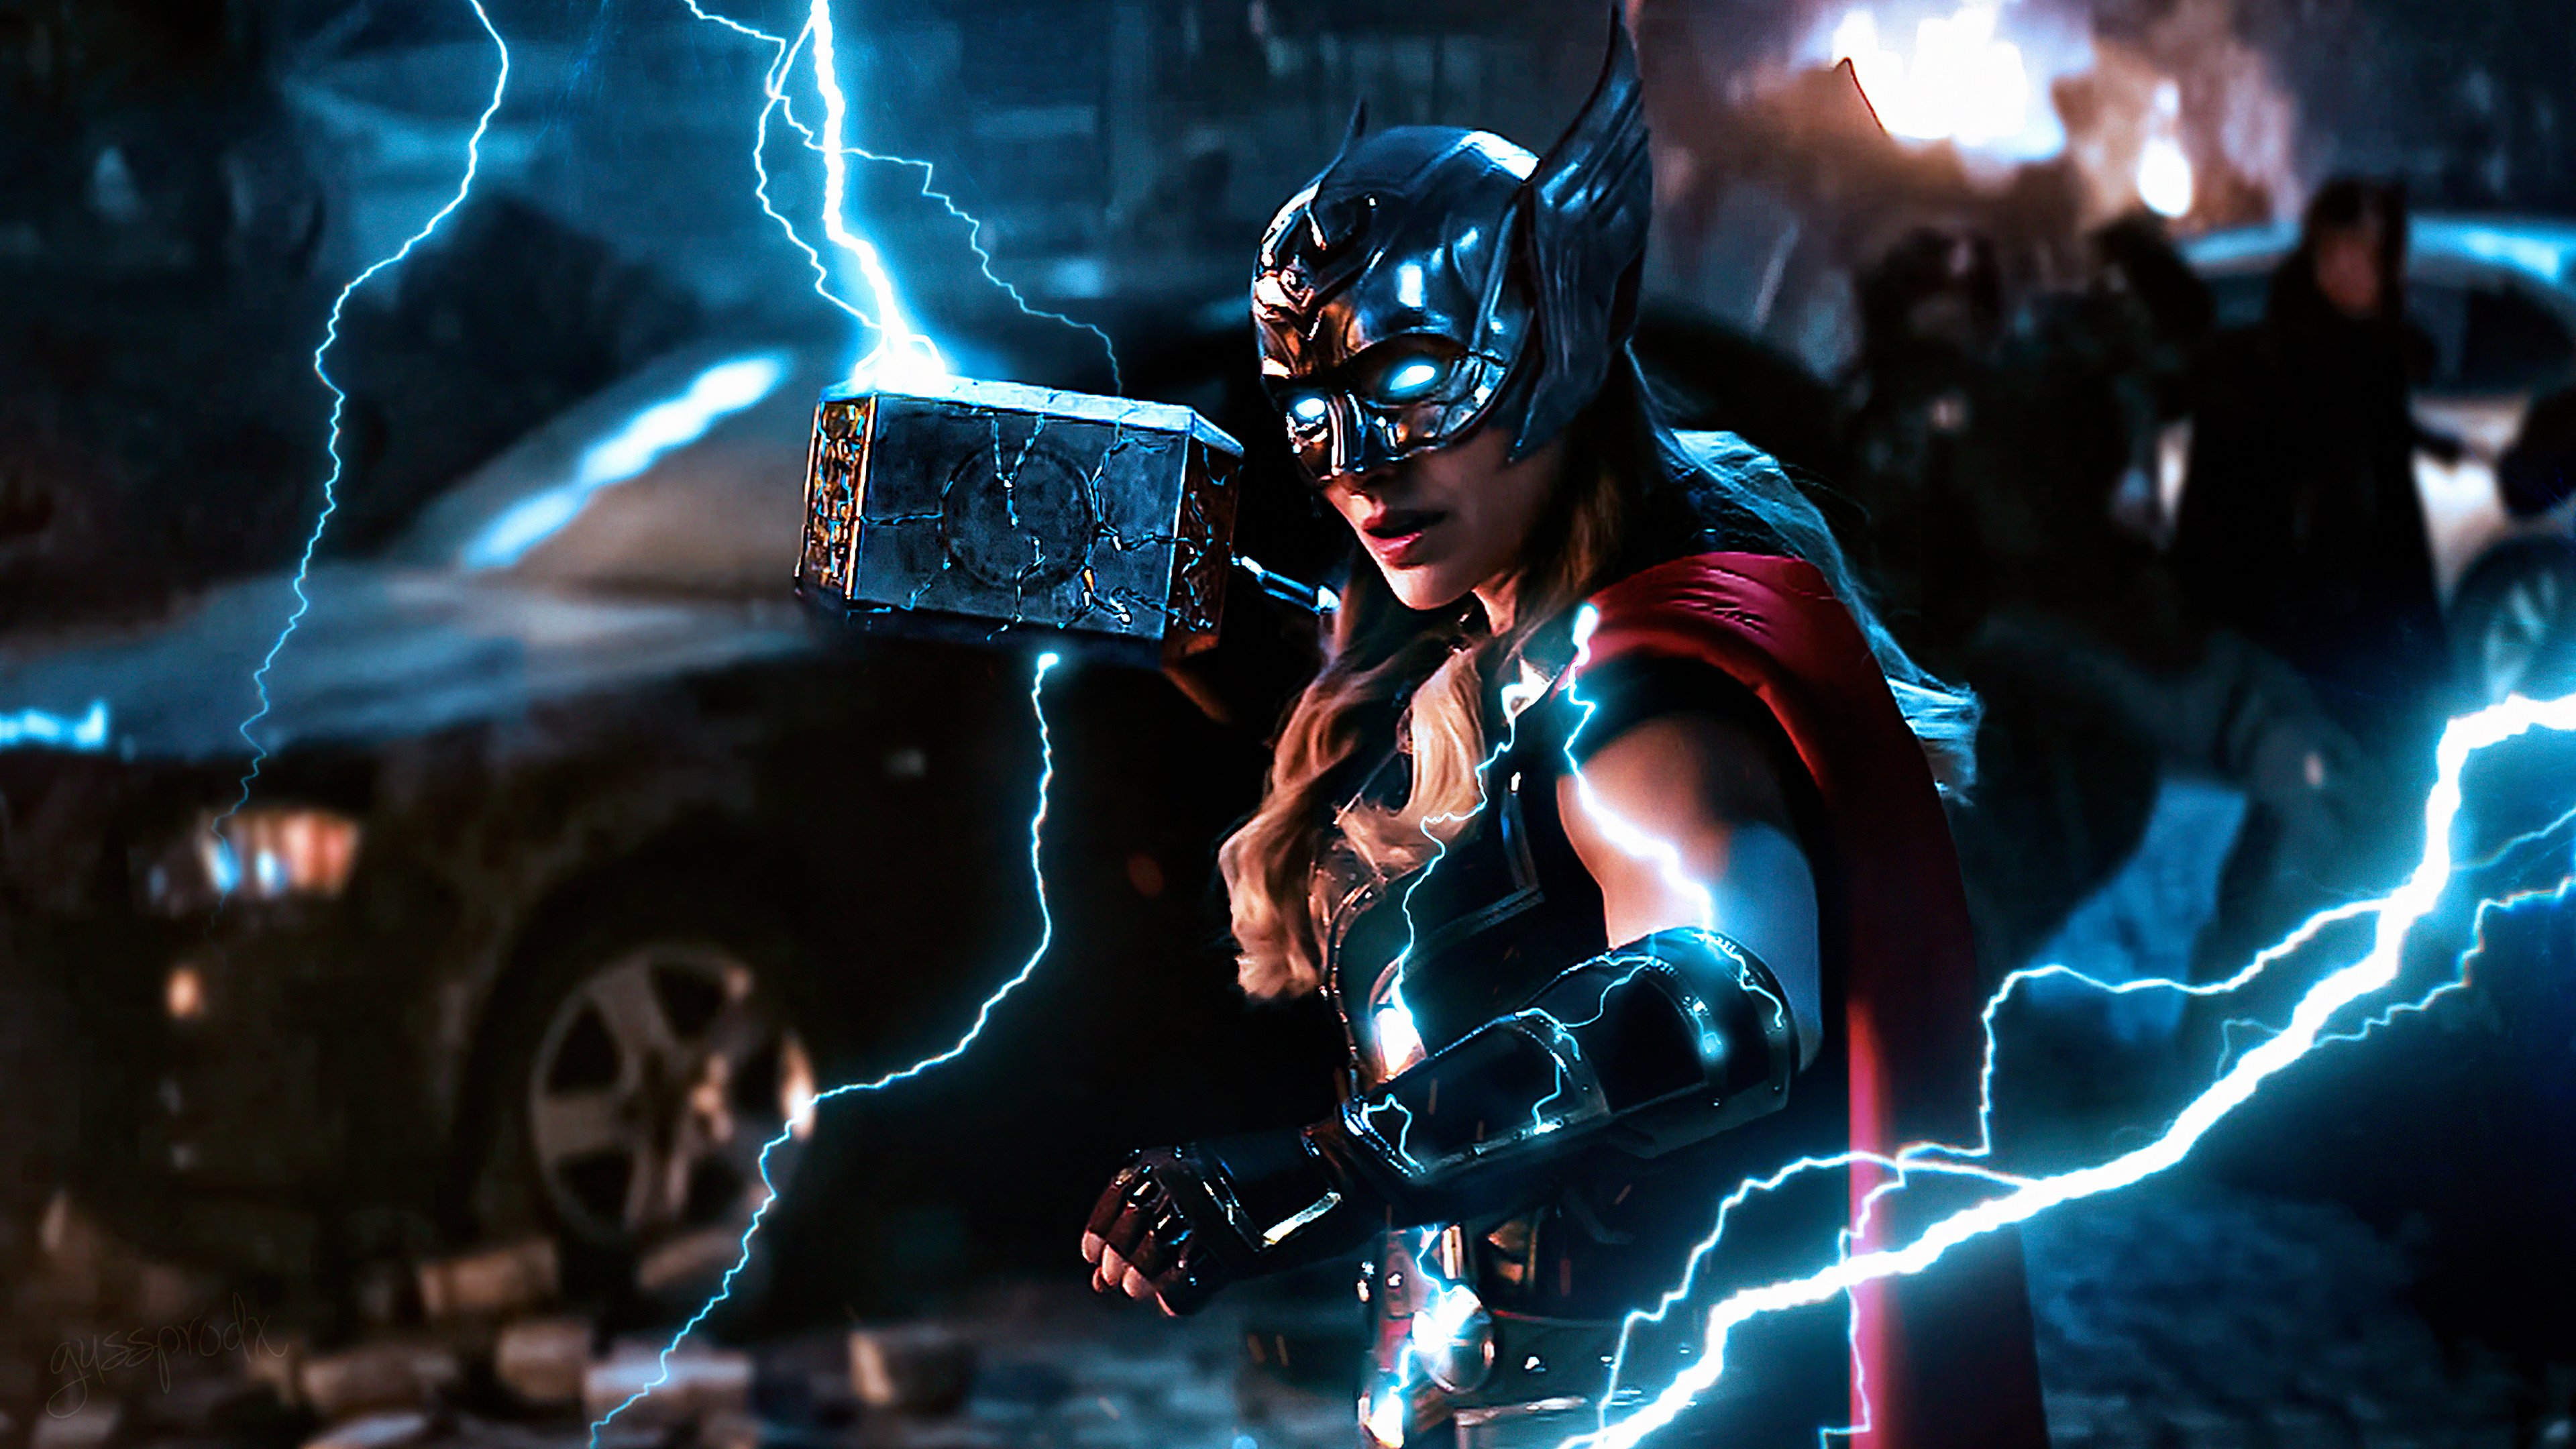 Fondos de pantalla Jane se convierte en Thor